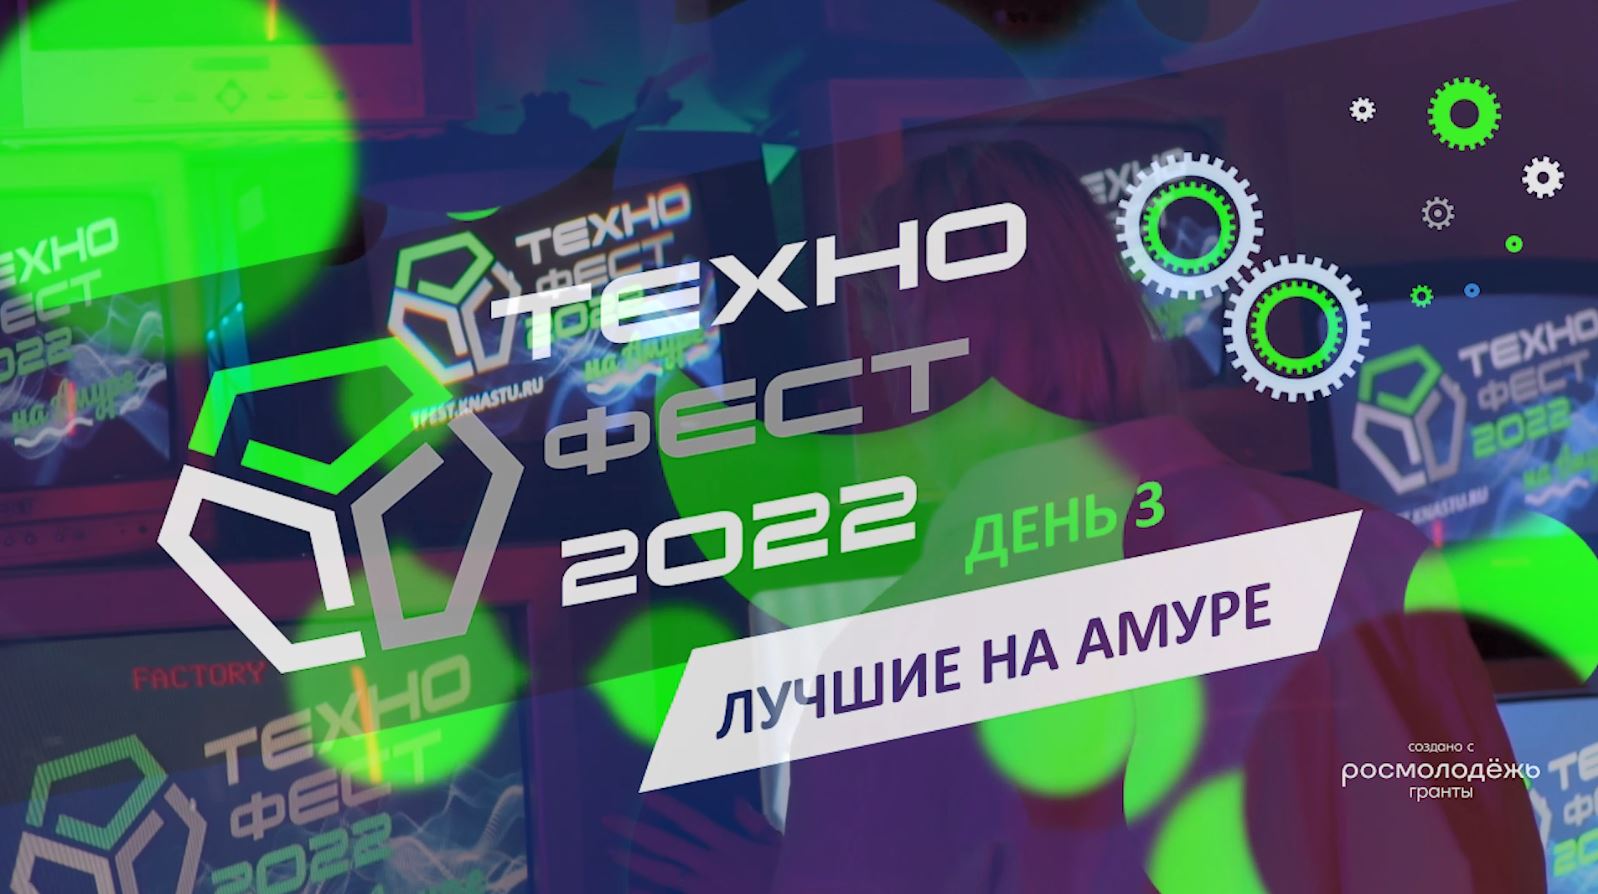 ТехноФест - 2022. День 3